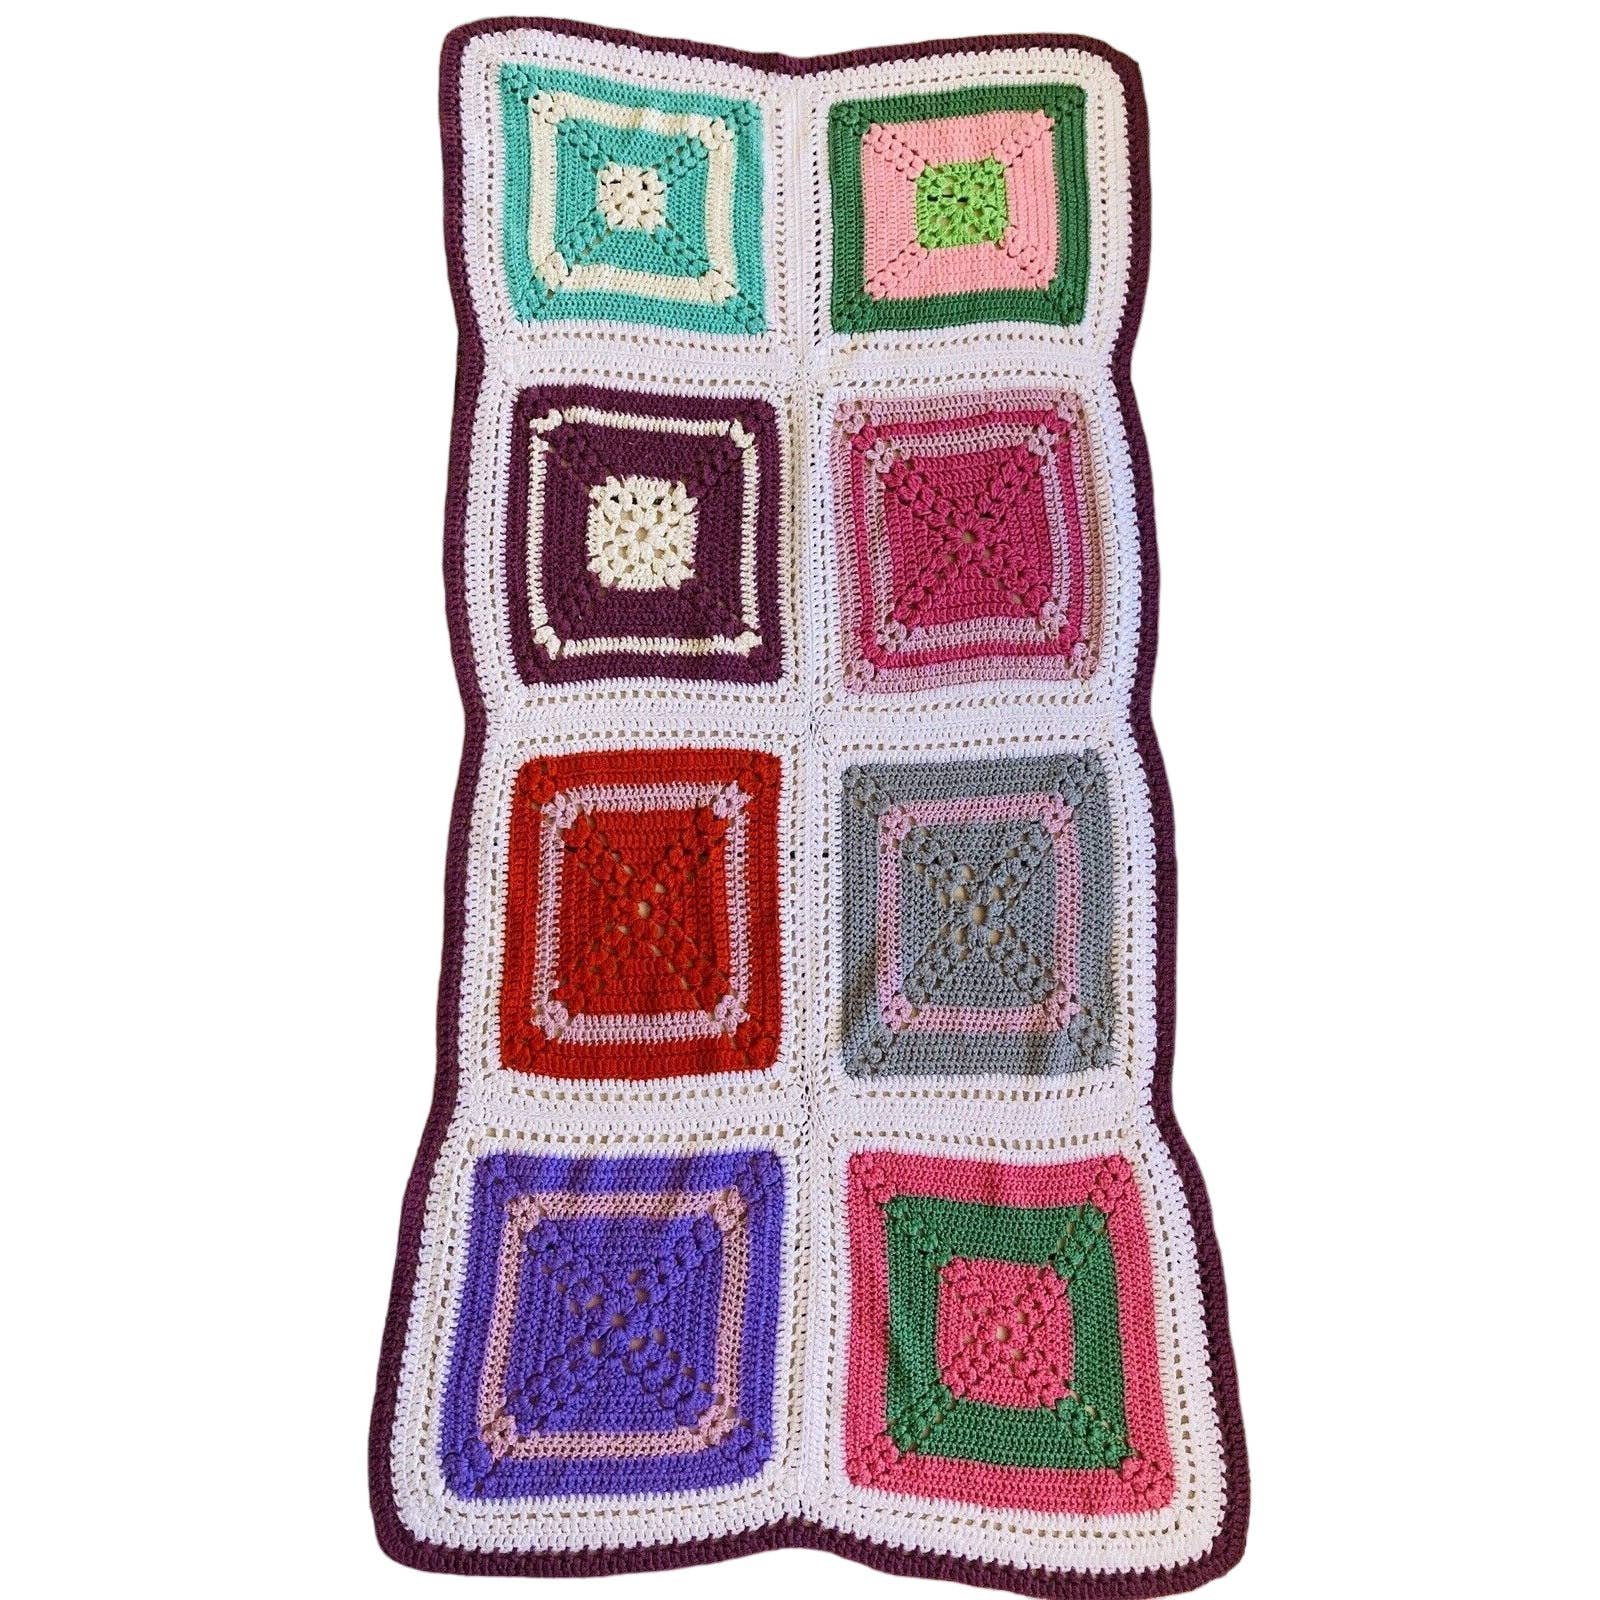 Handmade Afghan Lap Blanket Throw Granny Square 33 x 69